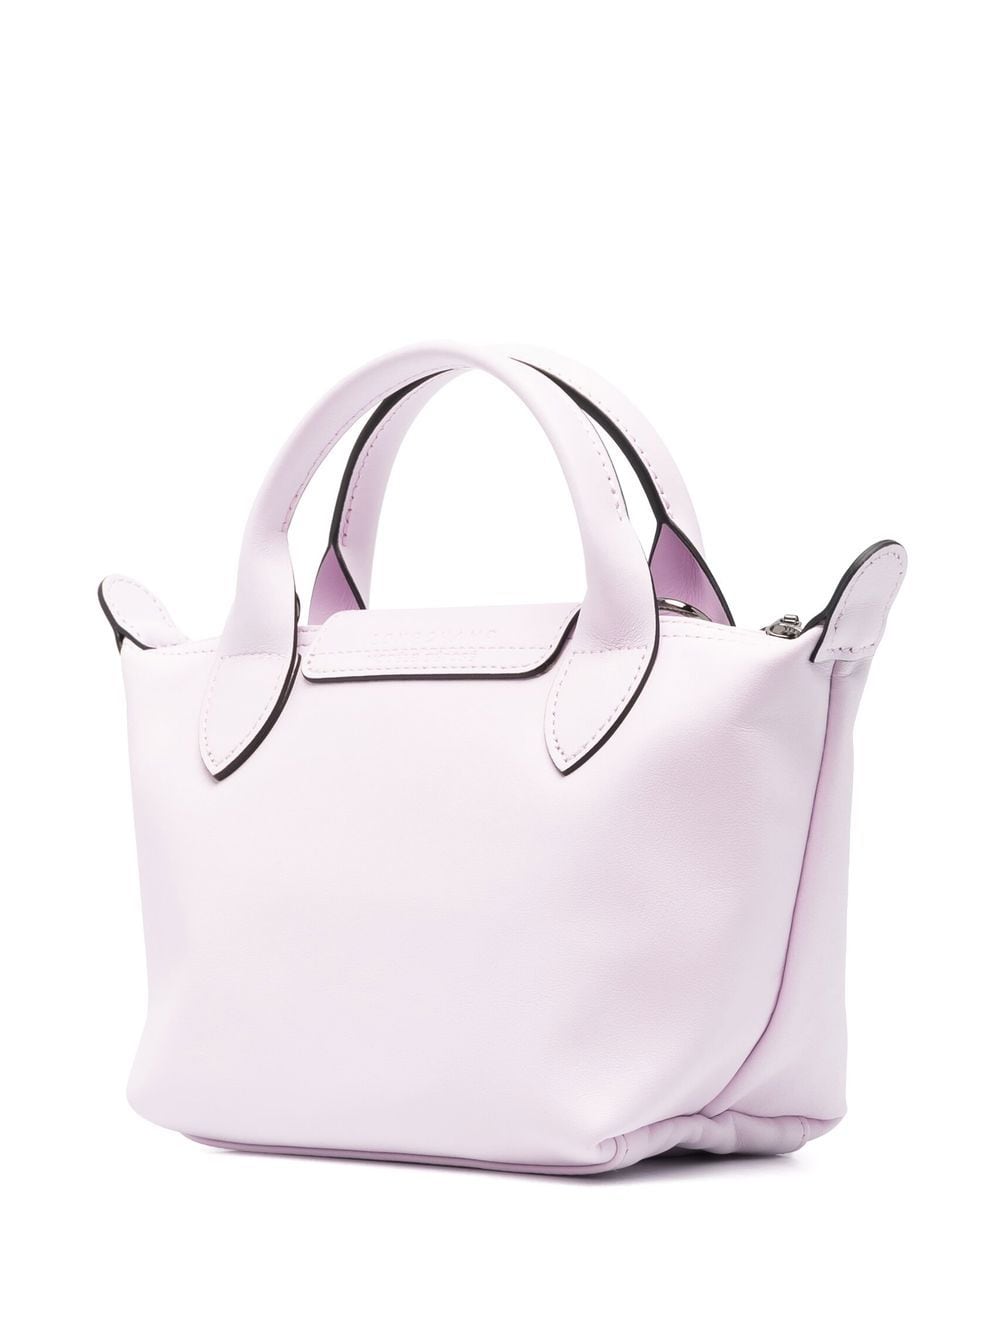 Longchamp Women's Leather Hobo Bag Petal Pink